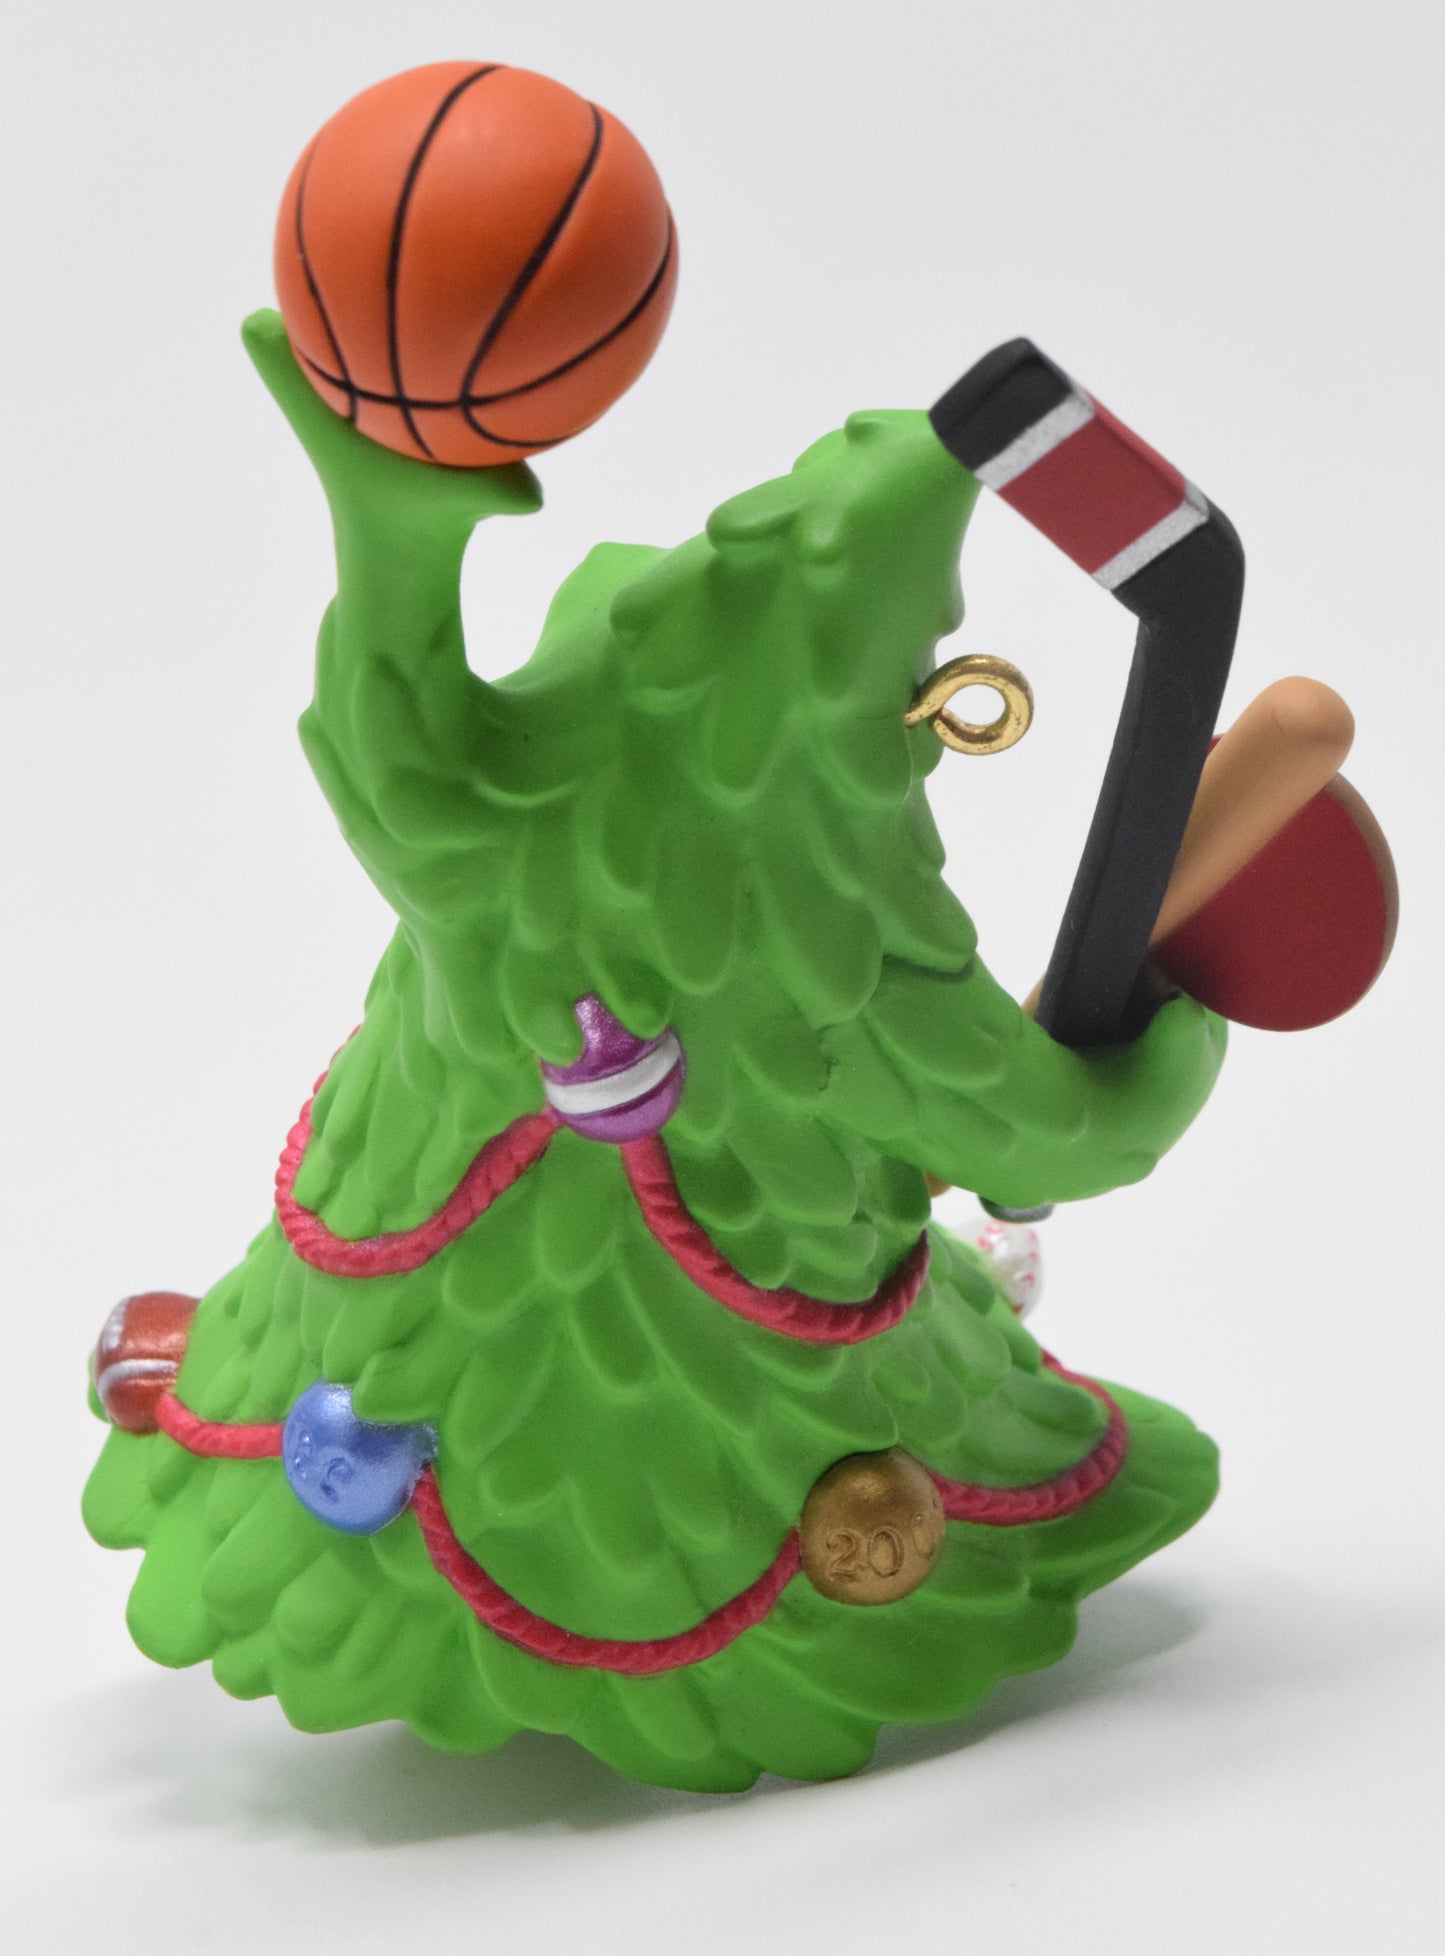 Hallmark Keepsake Tree Guy Sports Balls Christmas Ornament 2000 NIB